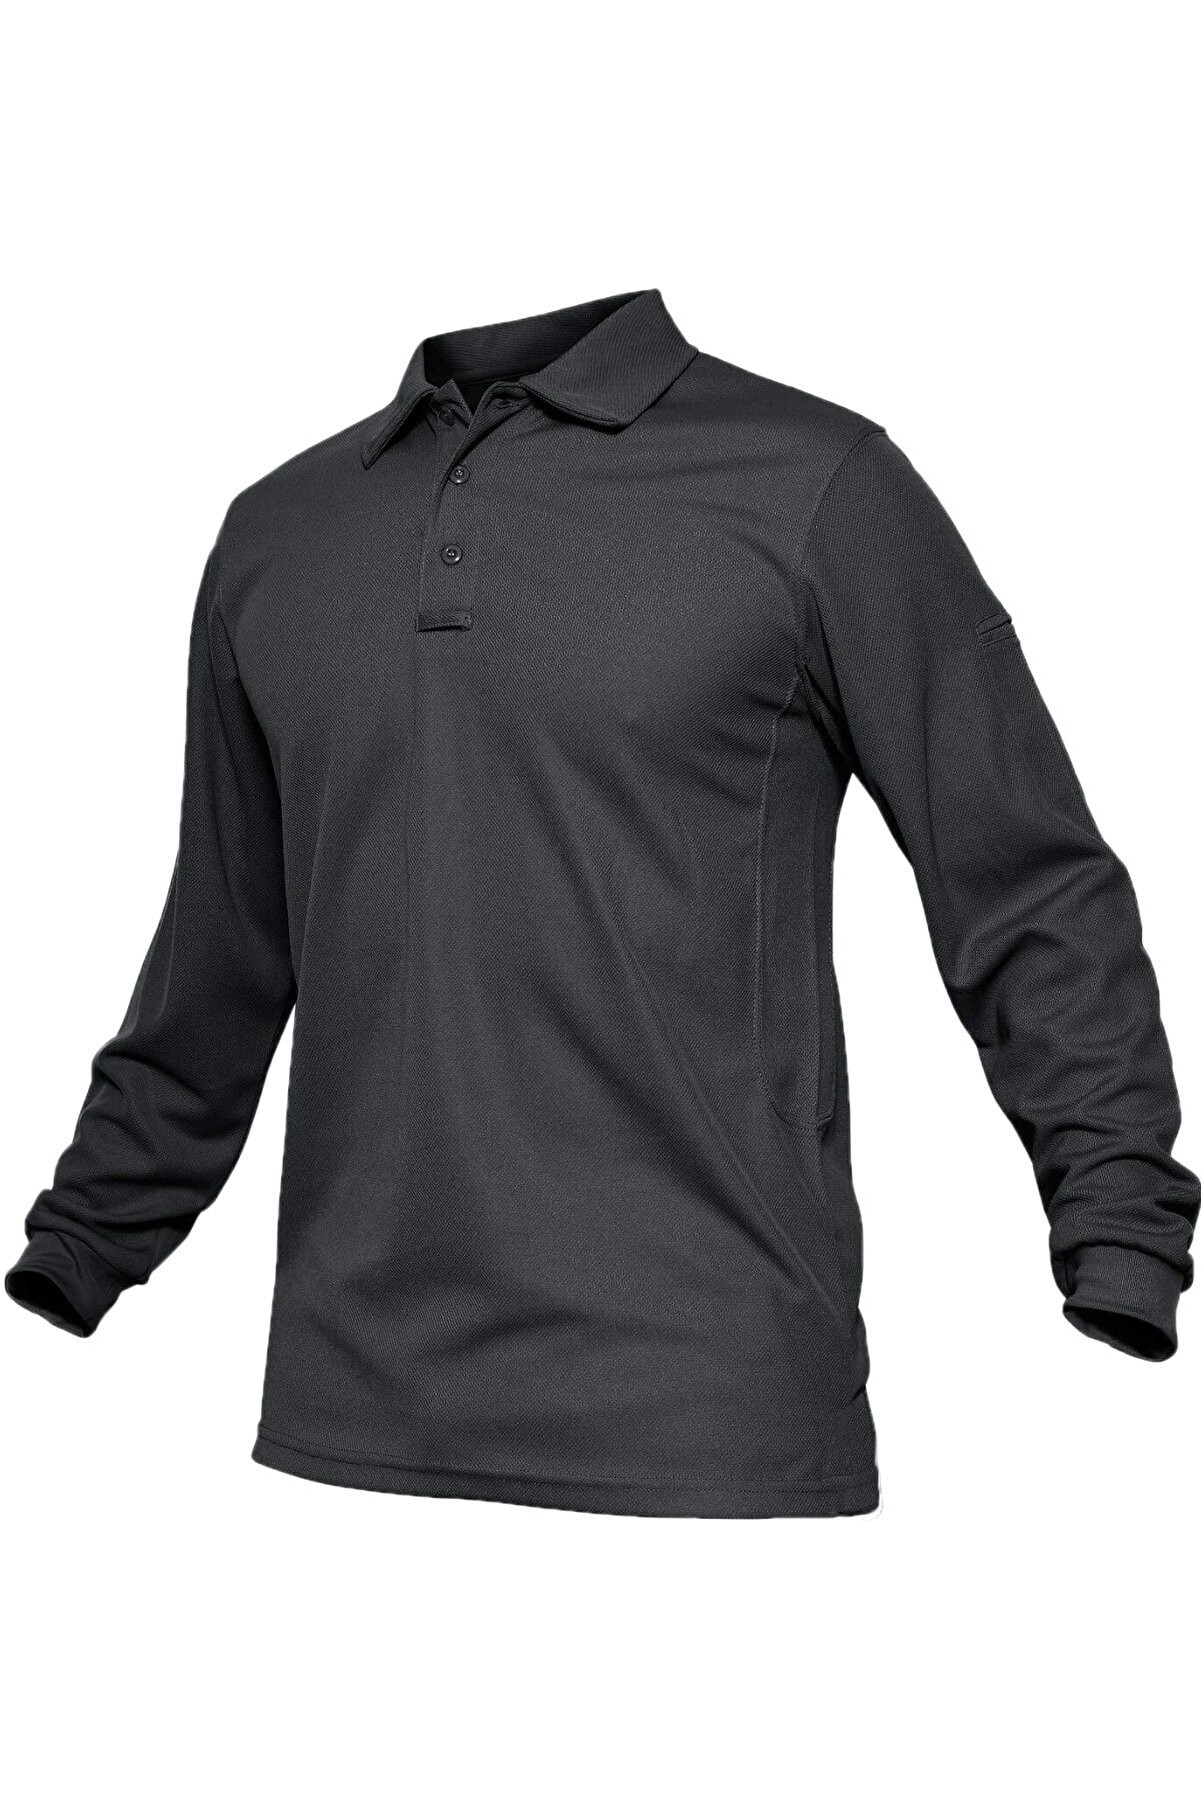 Ghassy Co. Erkek Jersey Golf Polo Gömlek Pike Performans Taktik Askeri Uzun Kollu T-Shirt - Koyu Gri